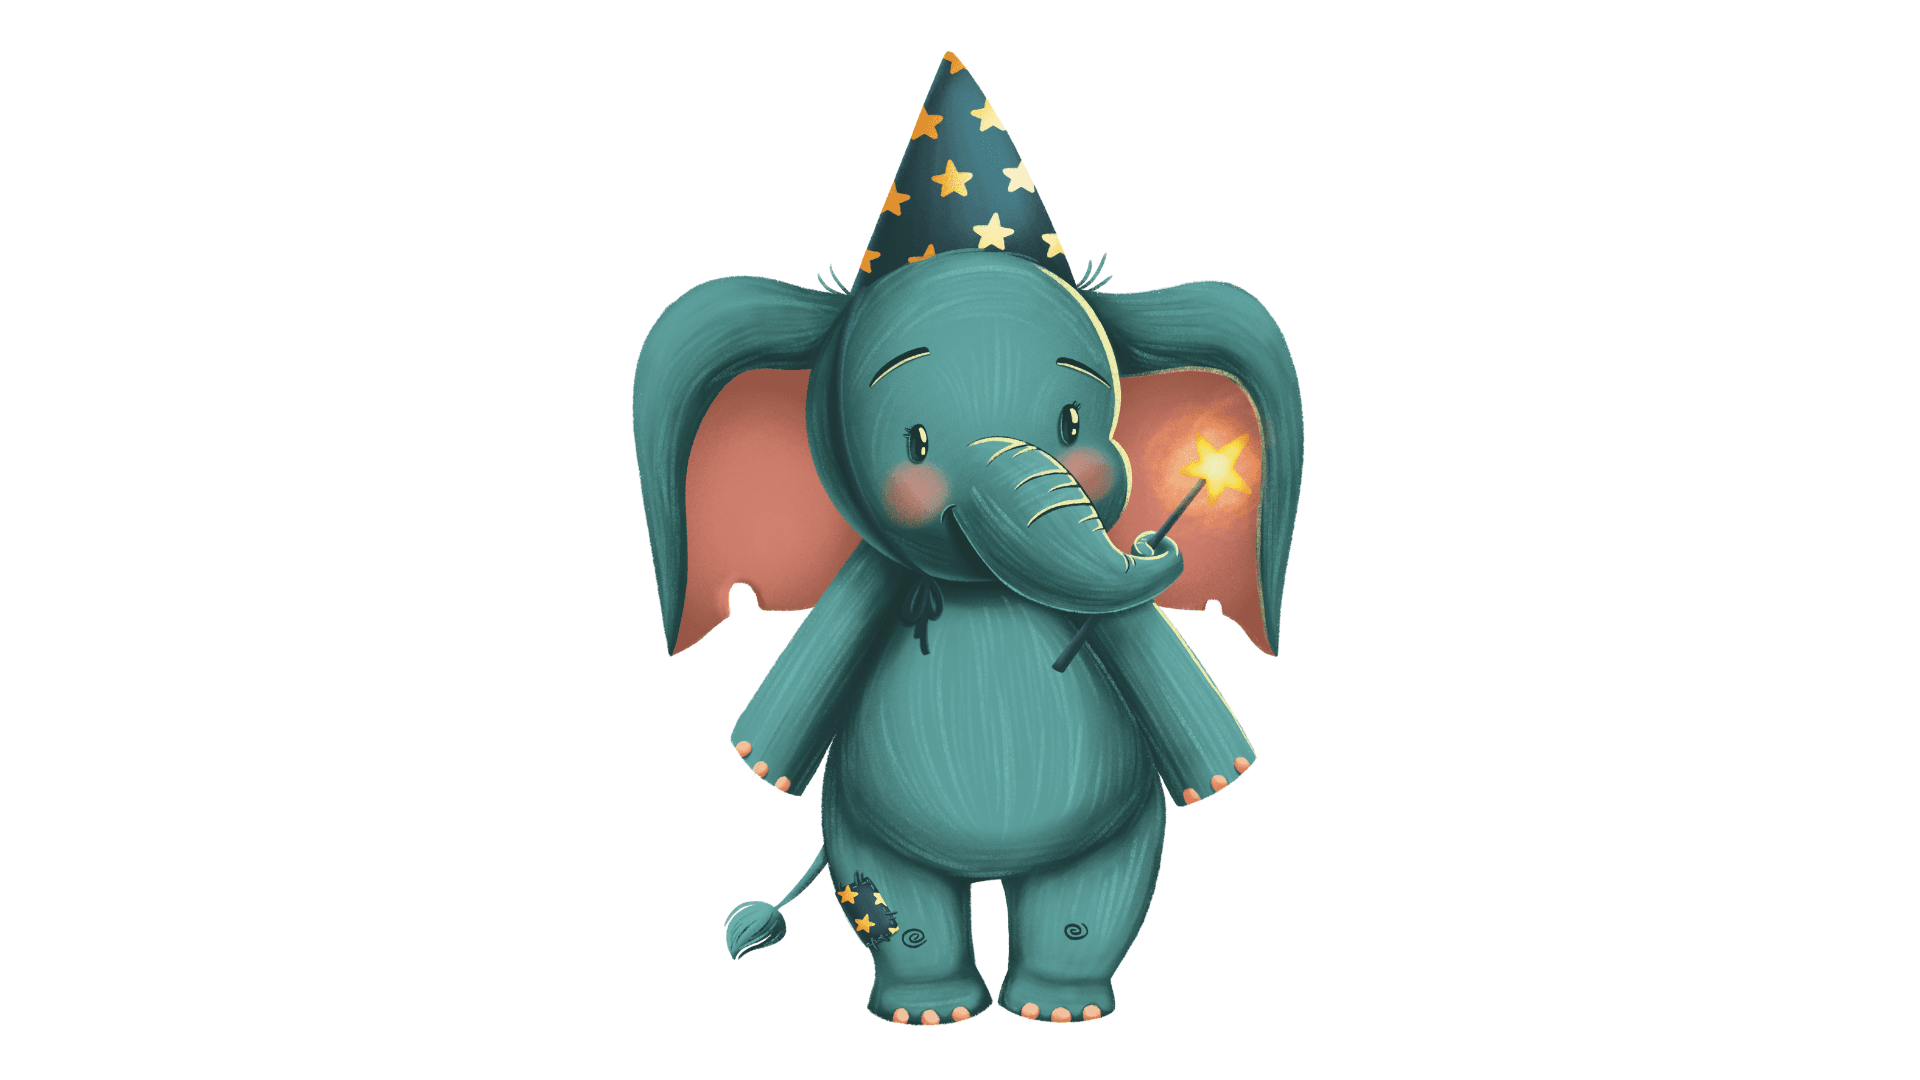 Birthday Elephant